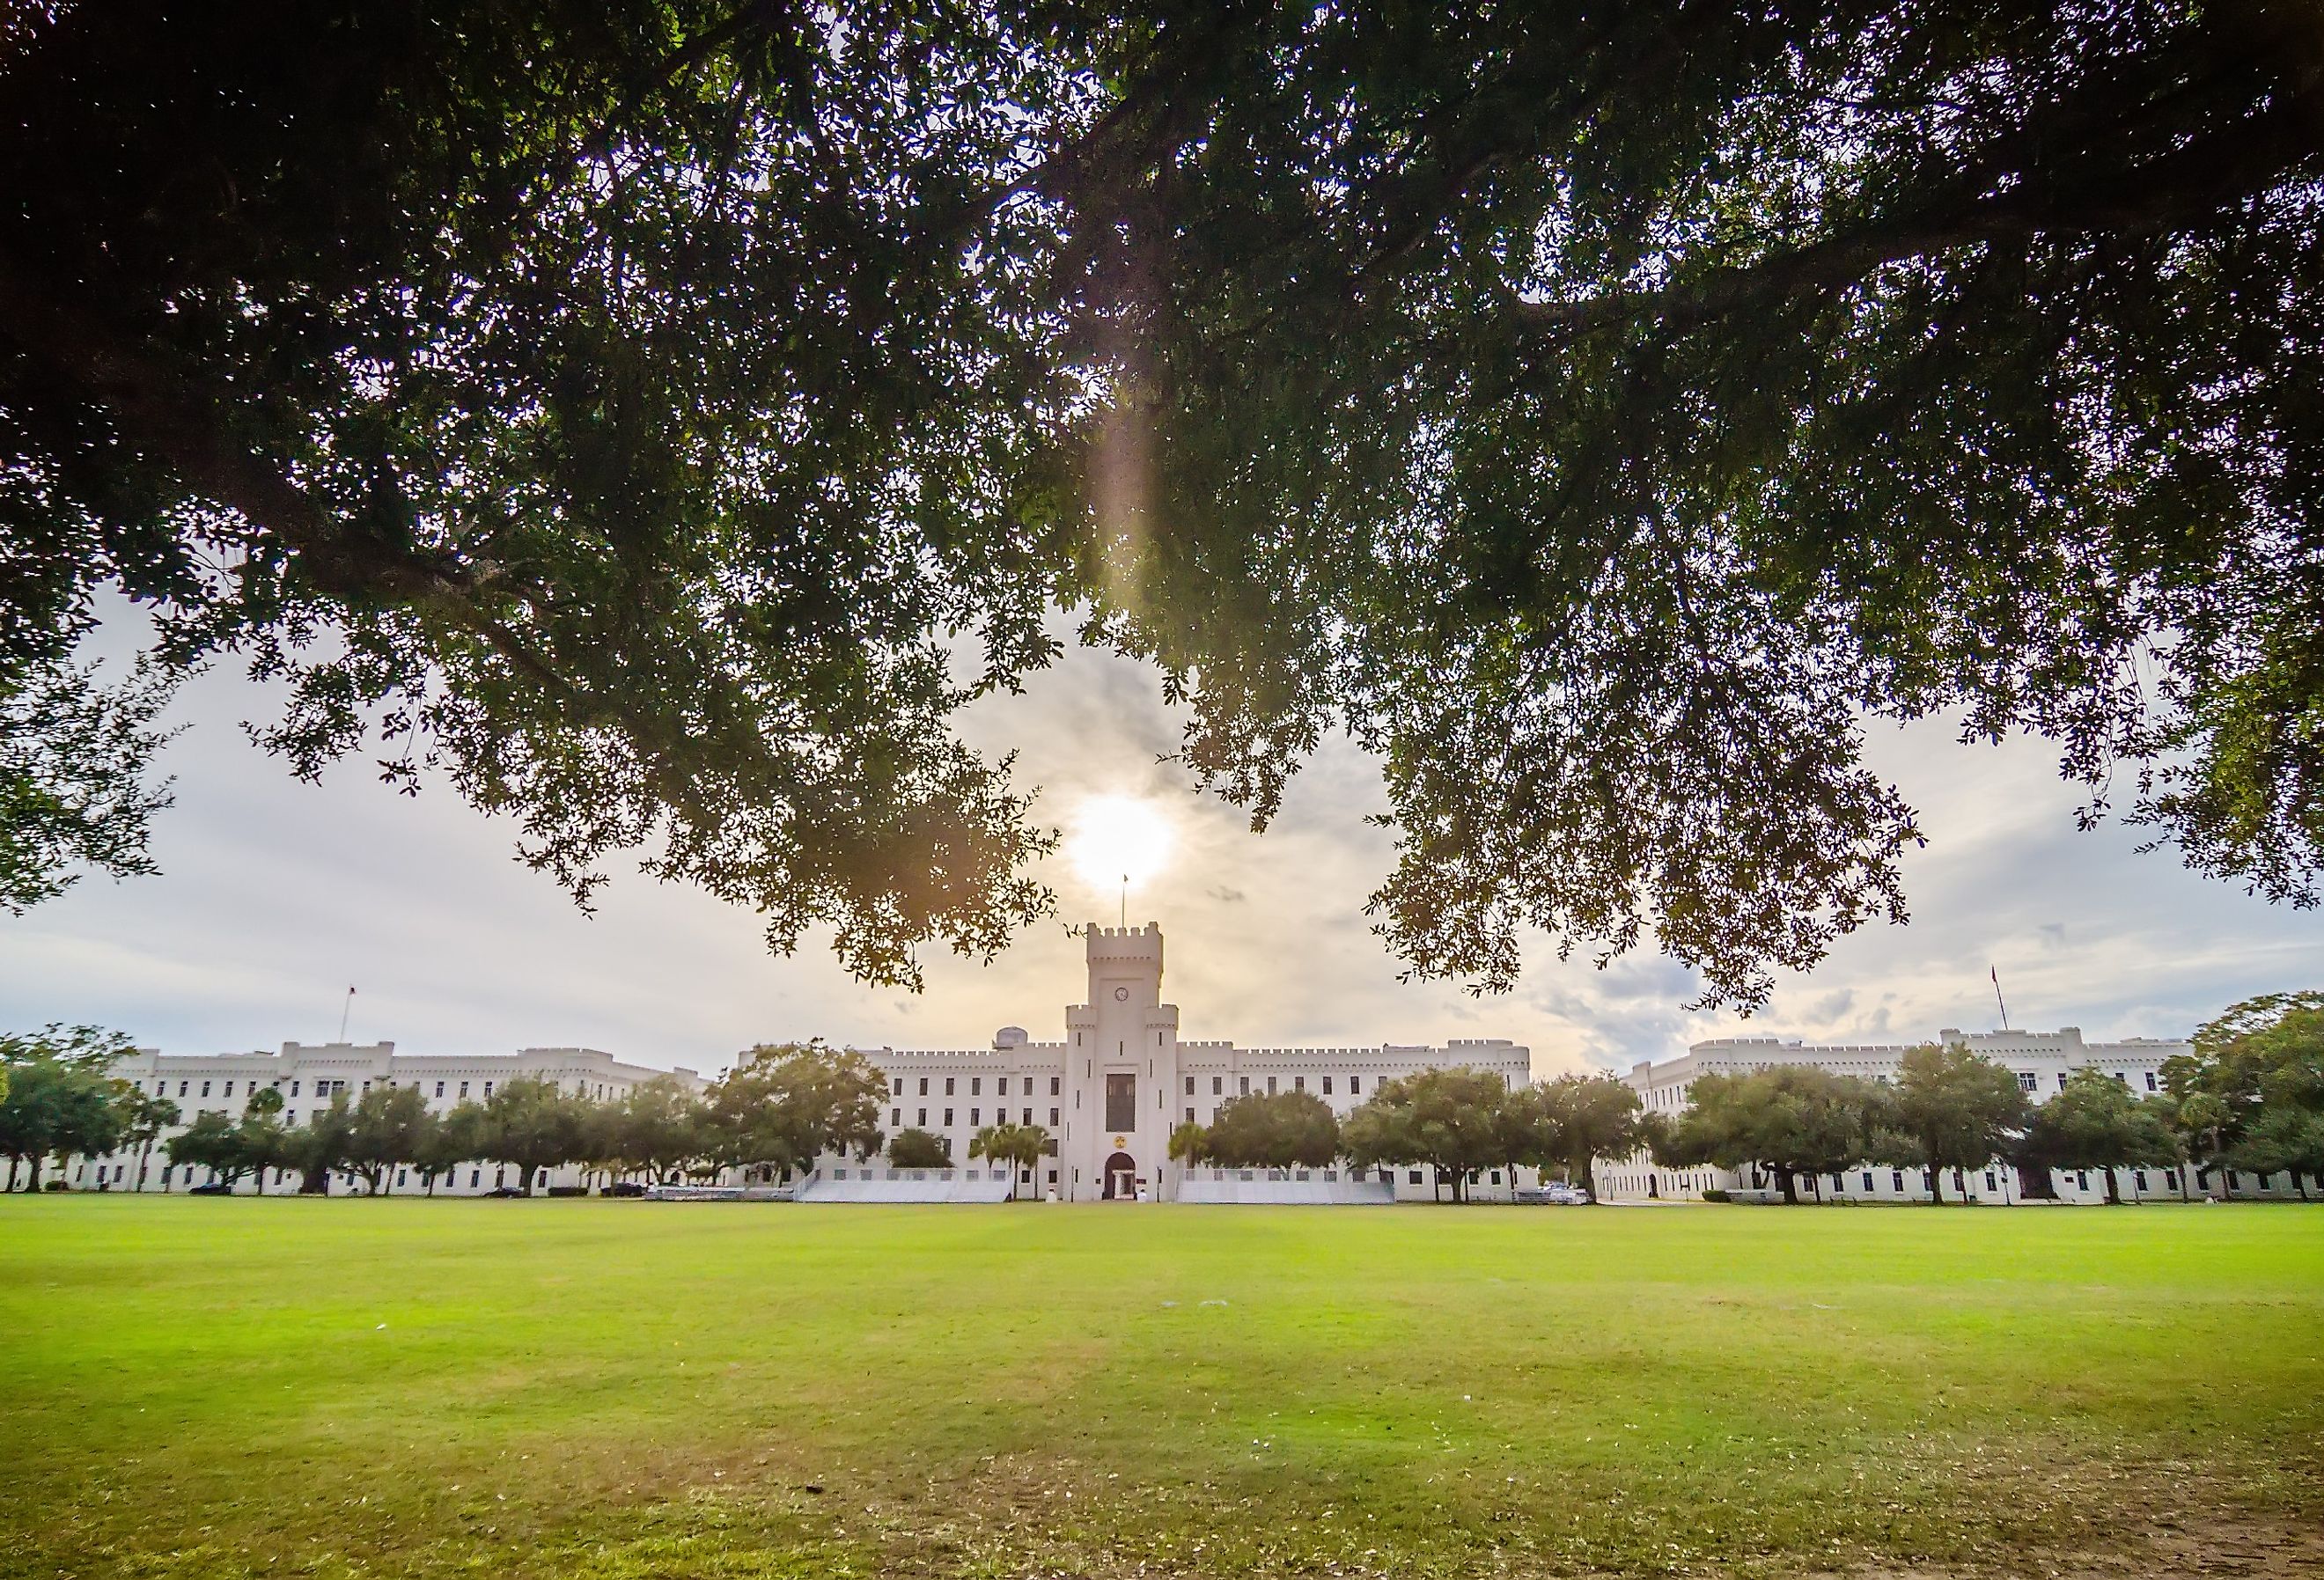 The old Citadel campus buildings in Charleston, South Carolina. Image credit digidreamgrafix via AdobeStock.